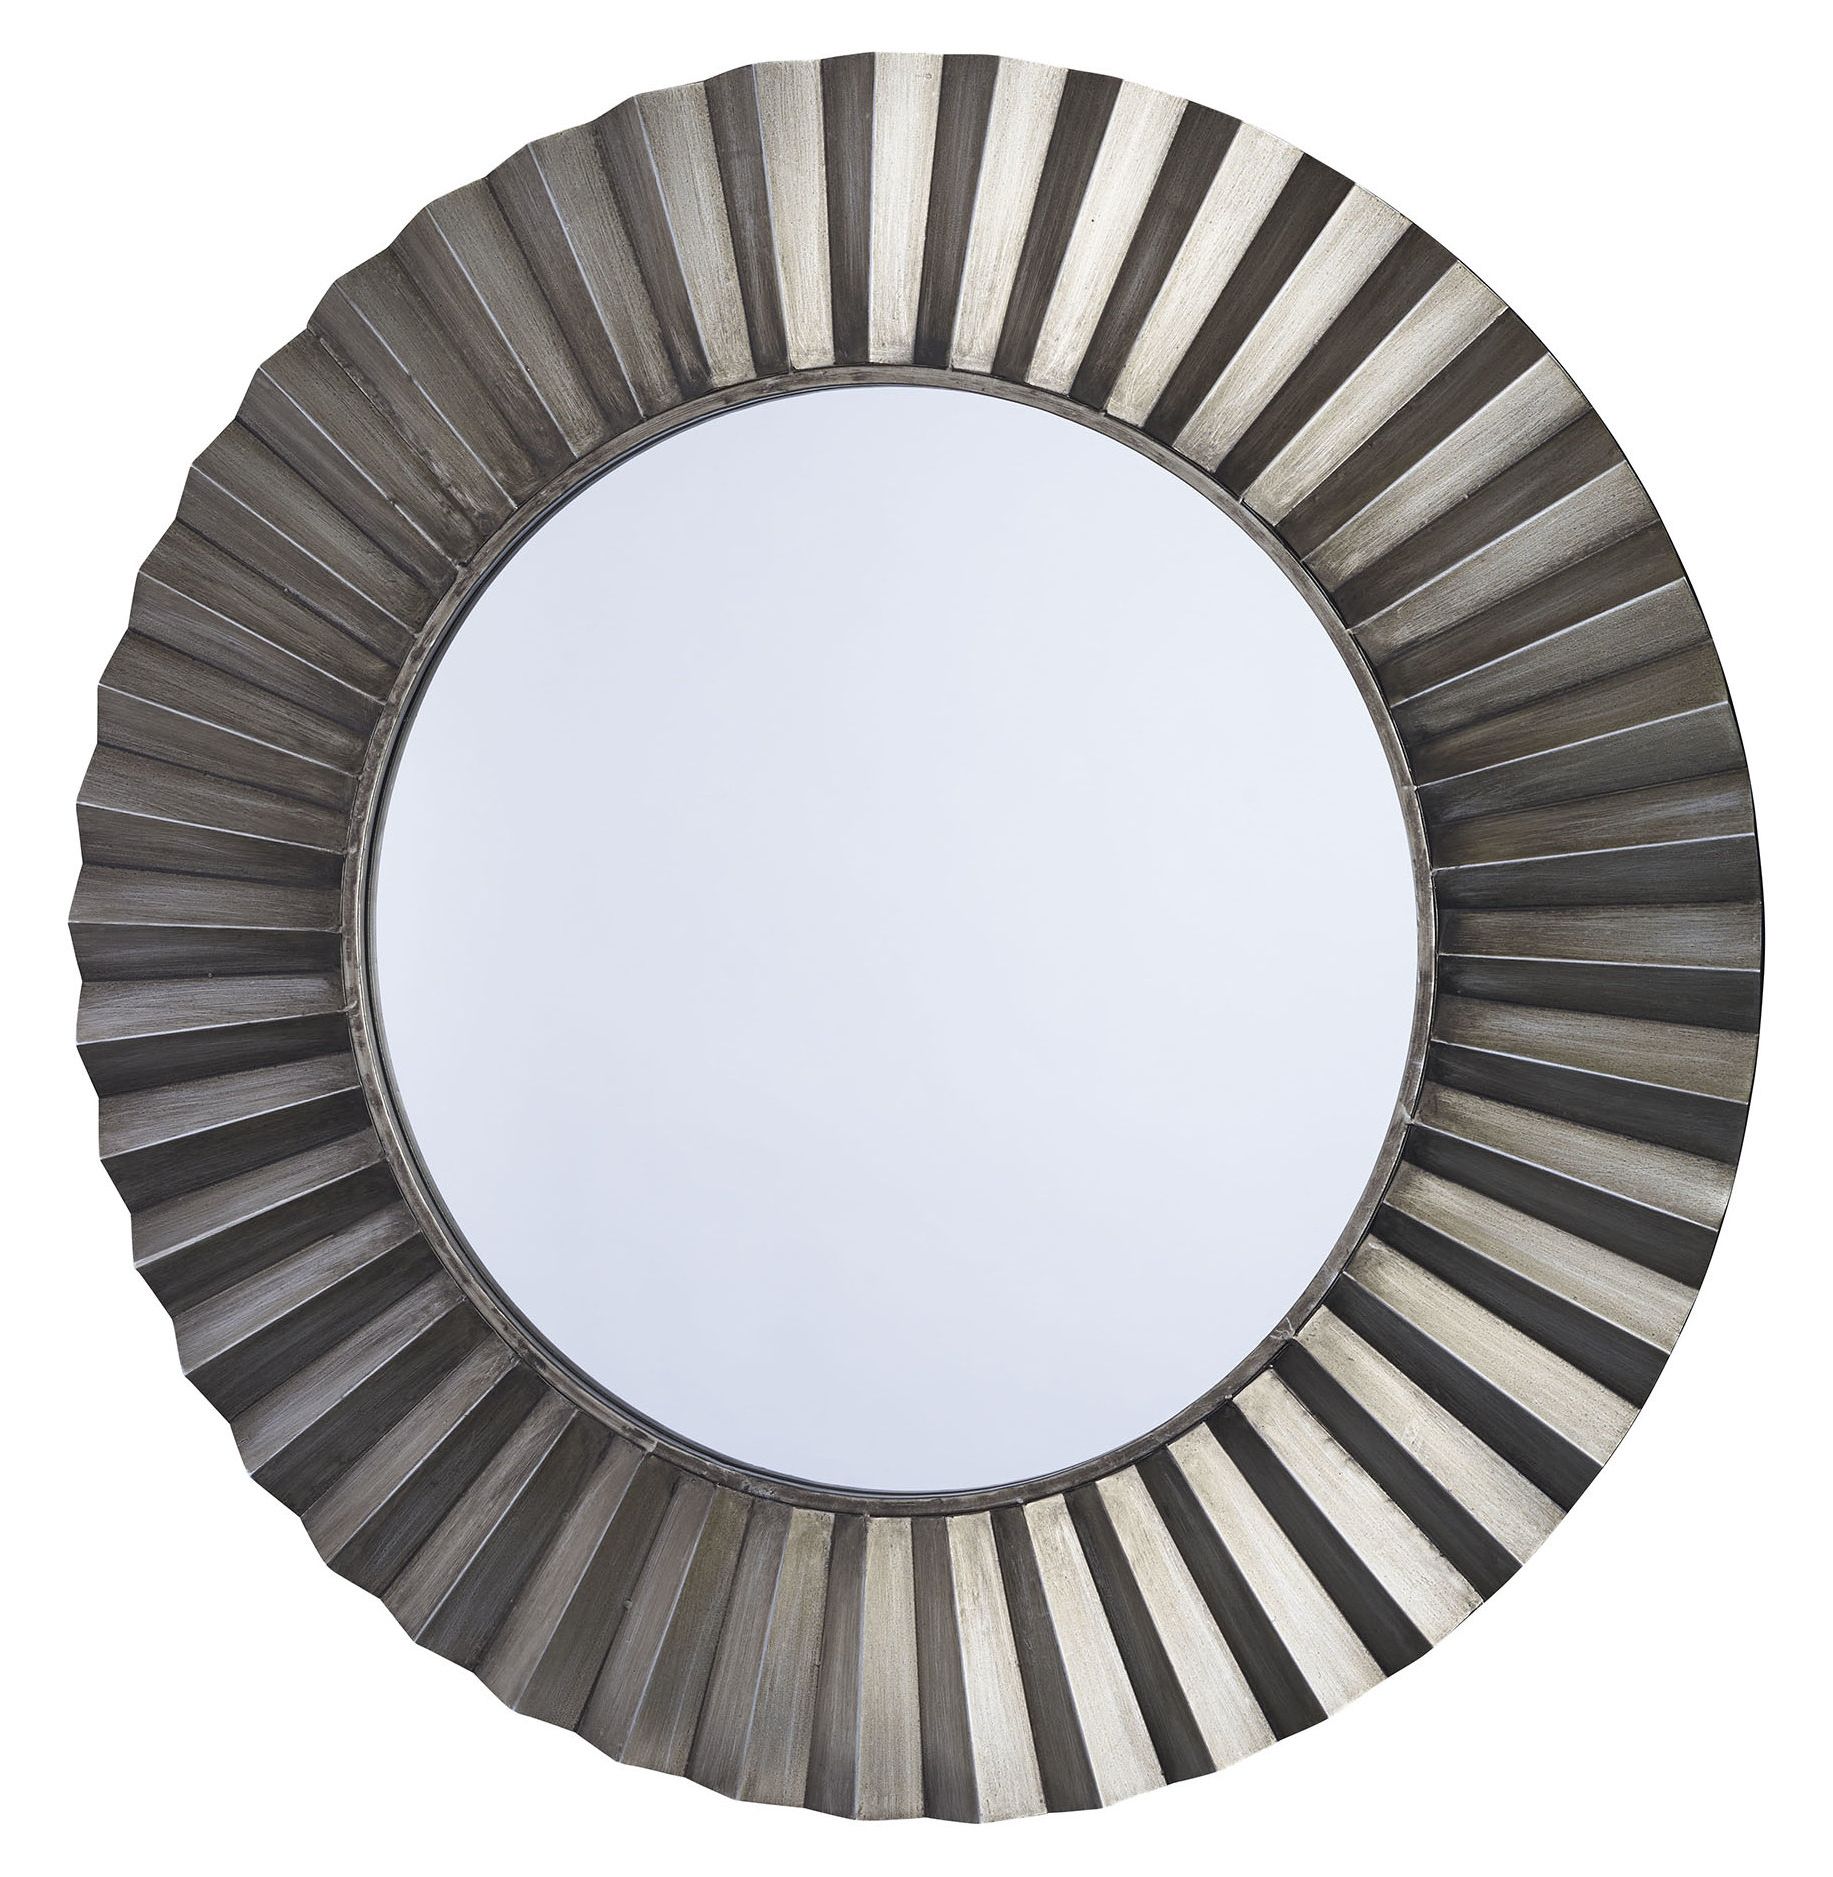 2019 Sunburst Round Wall Mirror With Regard To Lidya Frameless Beveled Wall Mirrors (View 12 of 20)